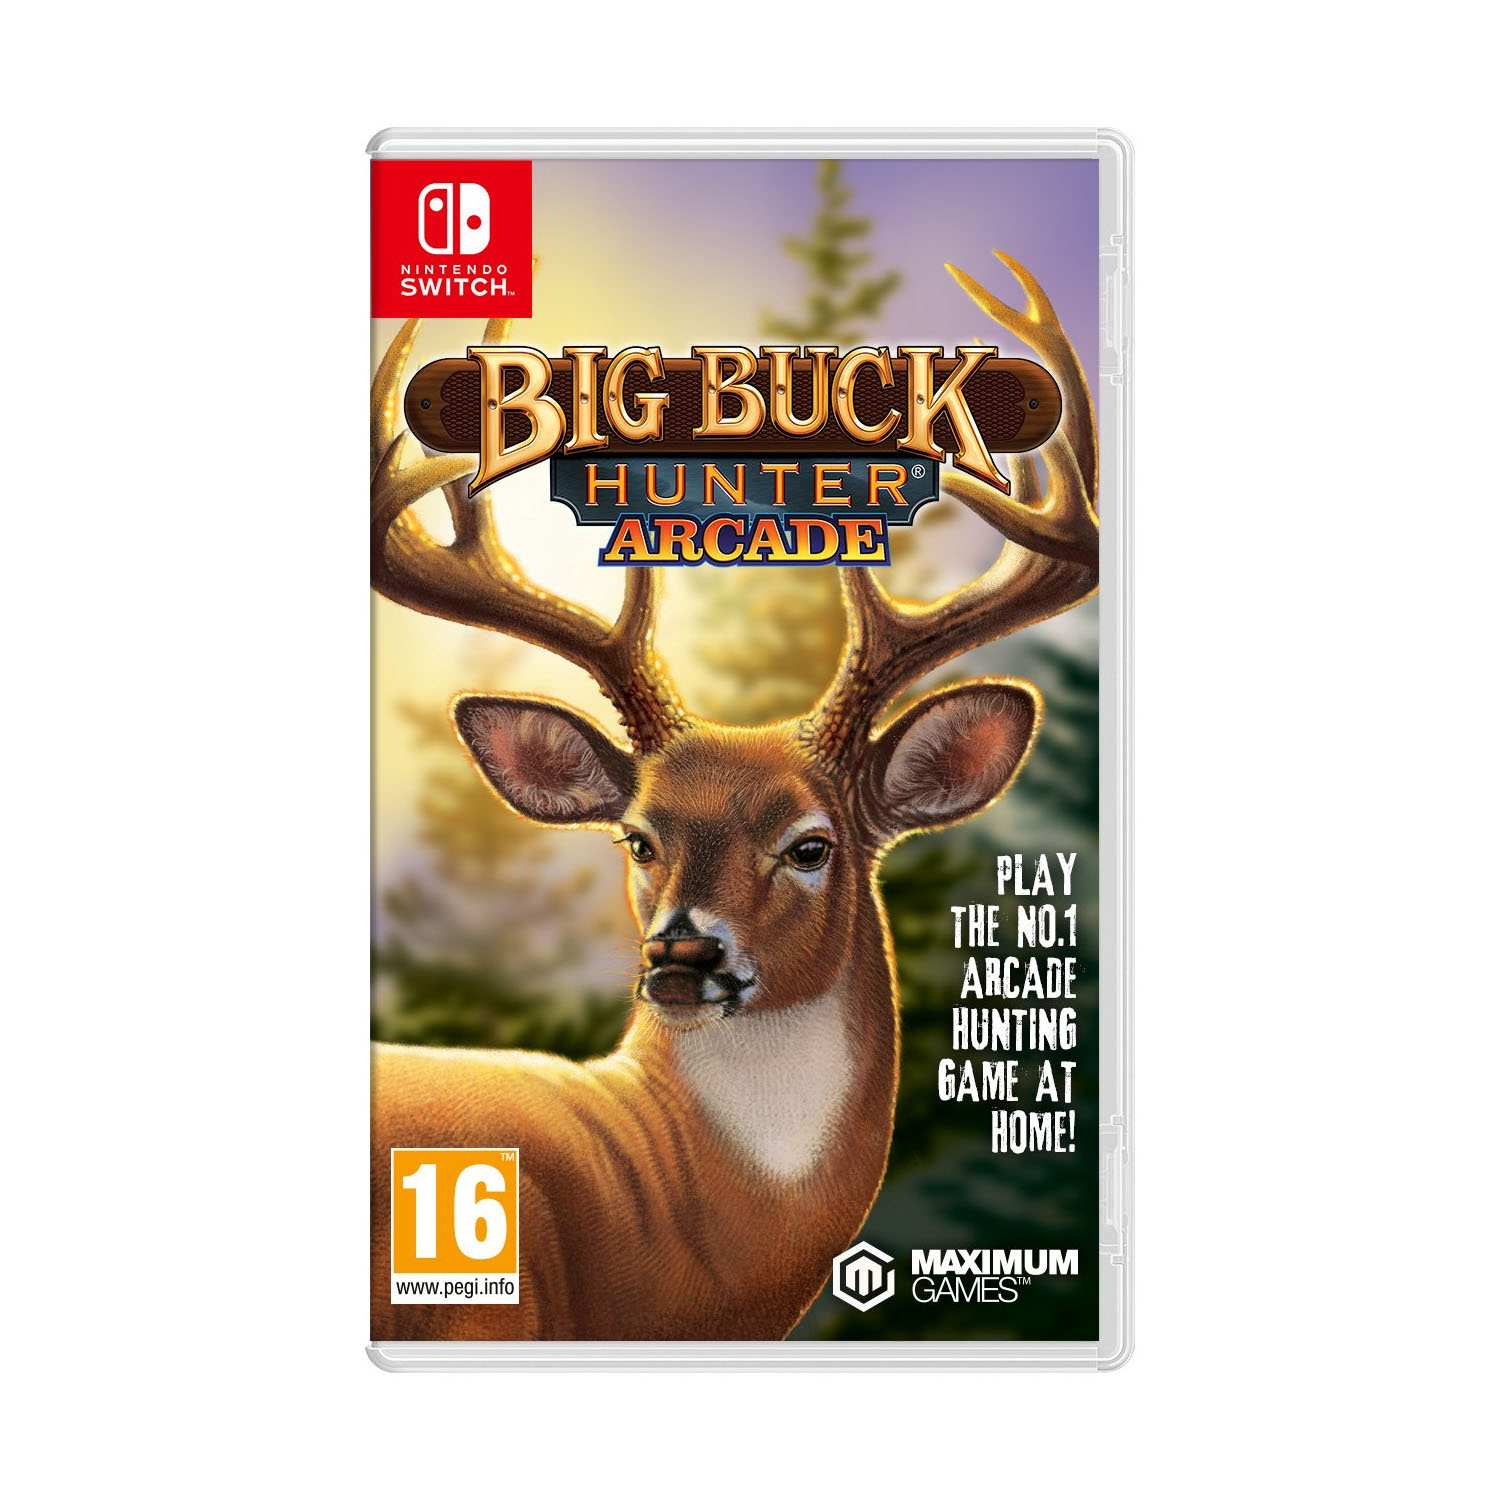 Ø¨Ø§Ø²ÛŒ Big Buck Hunter Arcade - Nintendo Switch